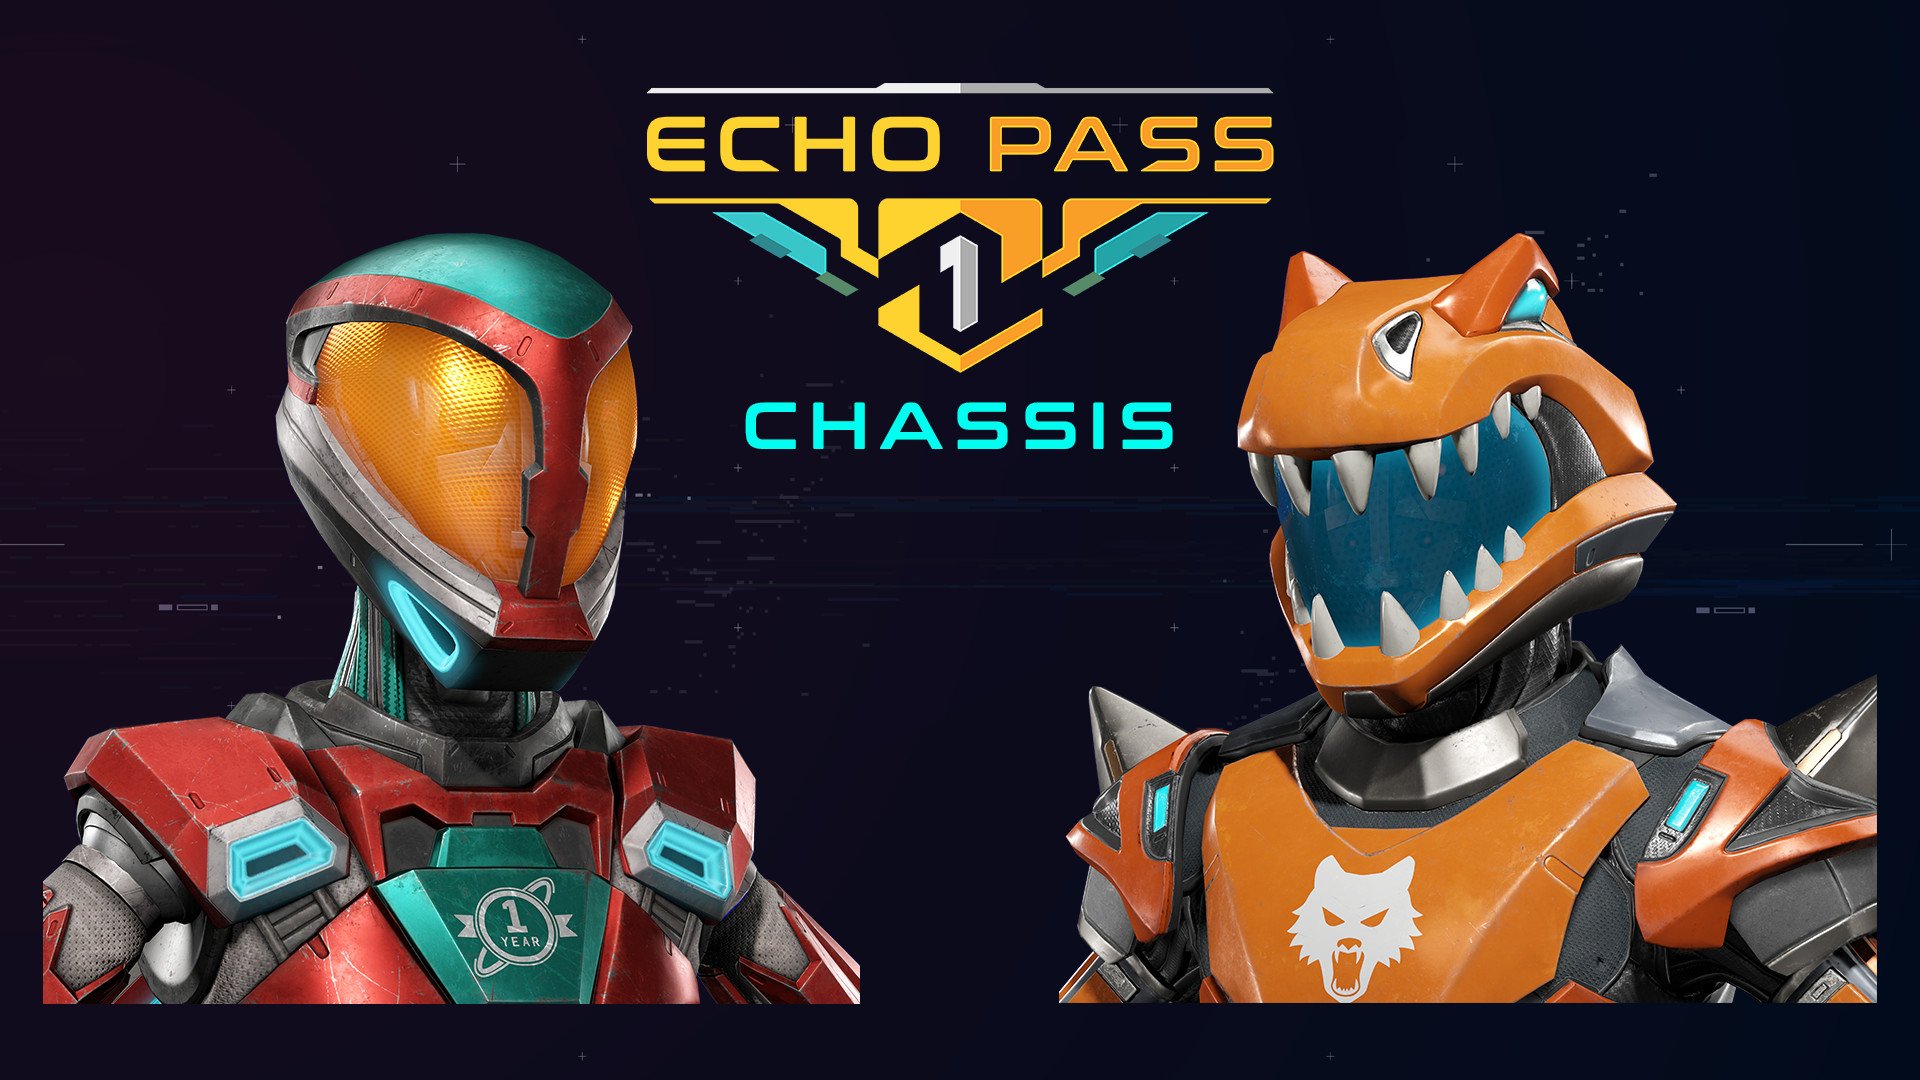 Echo Vr Echo Pass Season 1 Chassis